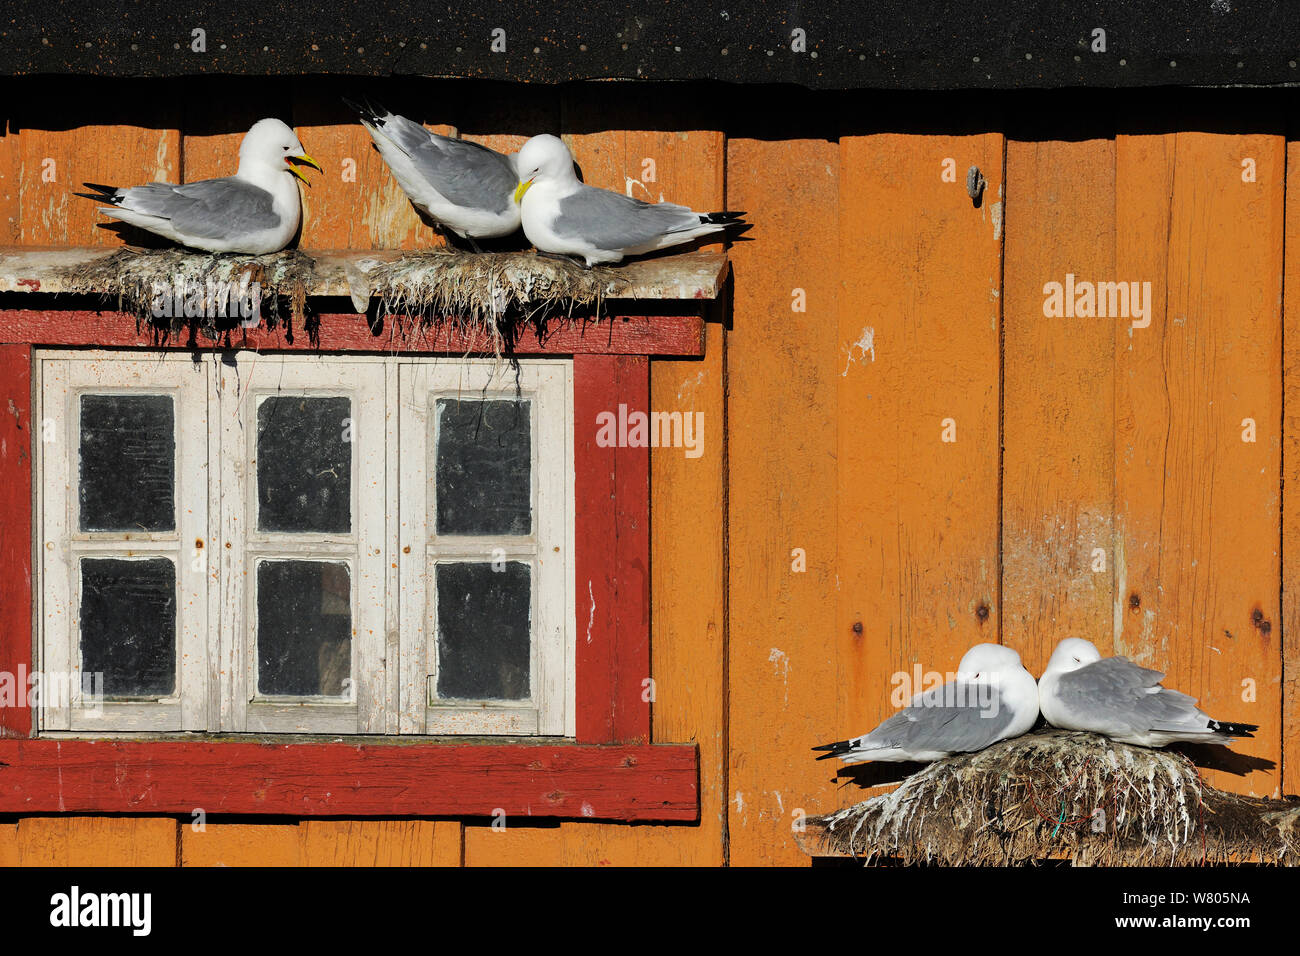 Kittiwakes (Rissa tridactyla) nesting on wall of house, Vardo town, Varanger Peninsula, Norway, March. Stock Photo